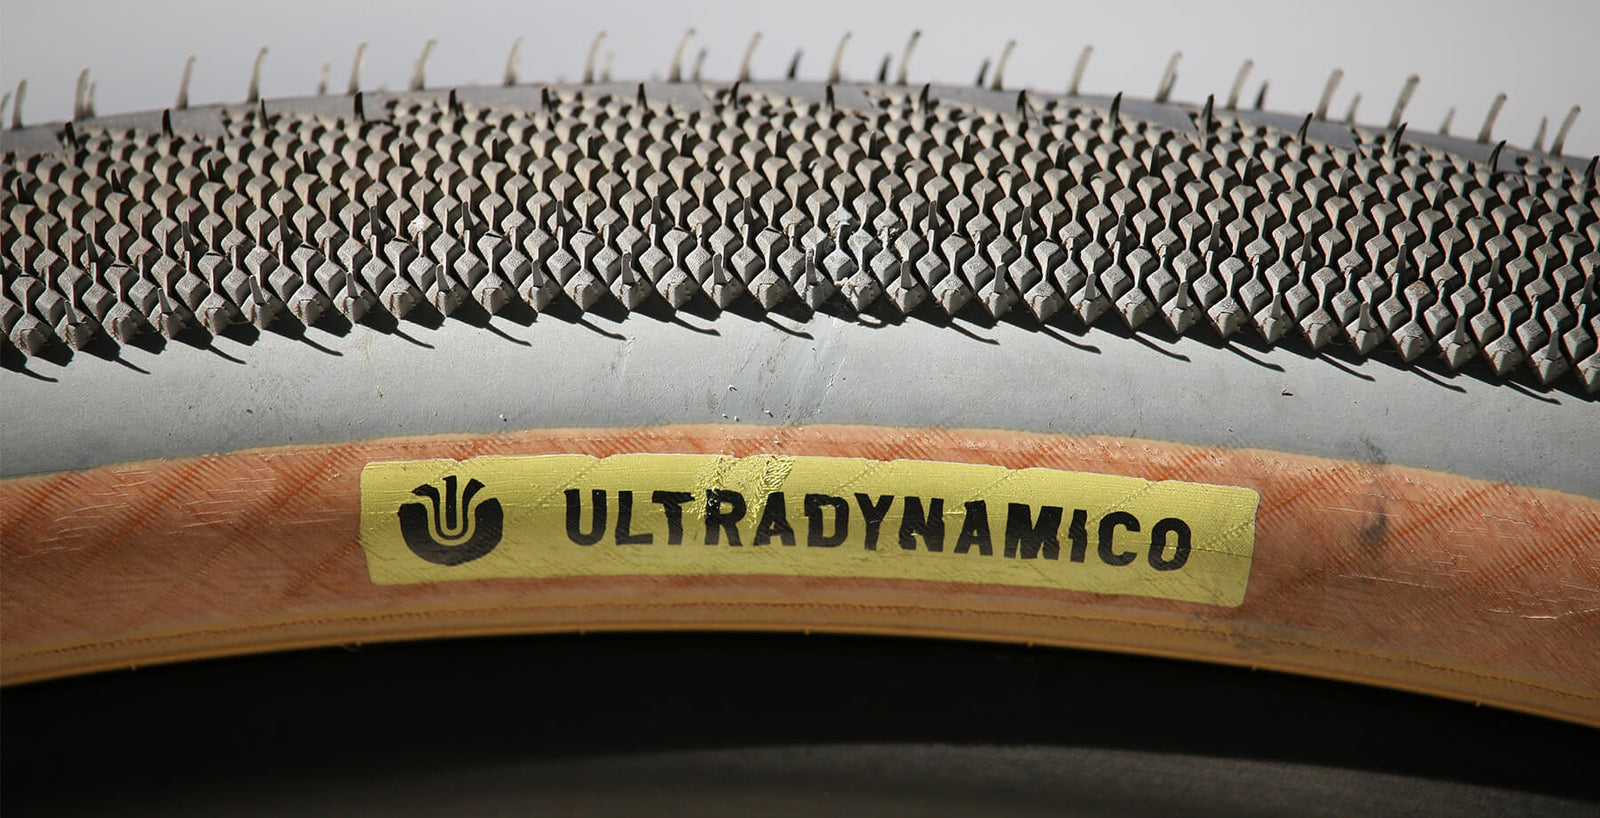 Ultradynamico Cava Tire Review: Stewart's Take